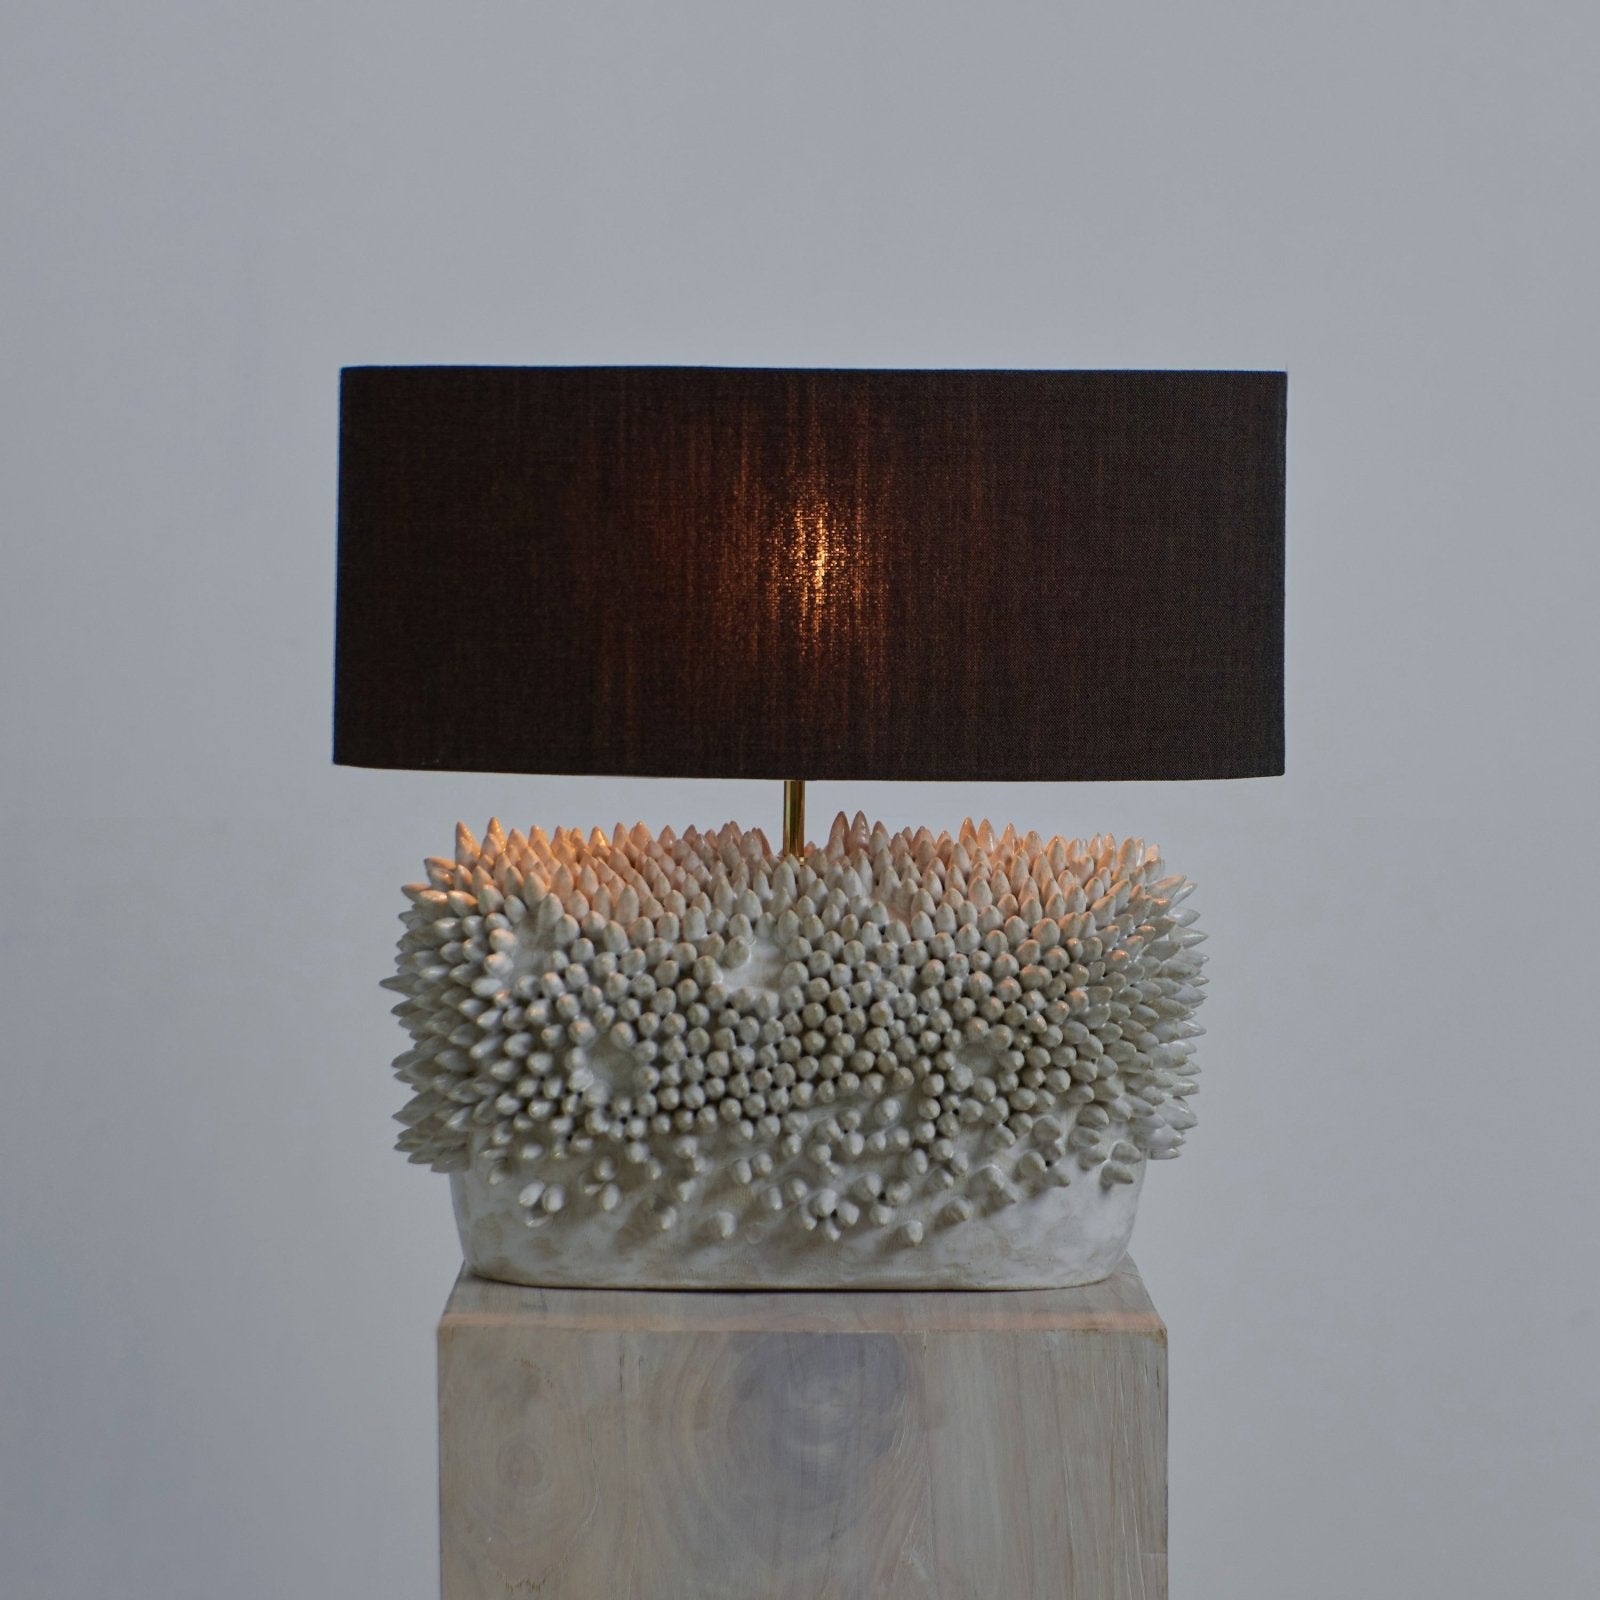 Appuntito Ceramic Lamp - Tischlampe Lighting von Project 213A